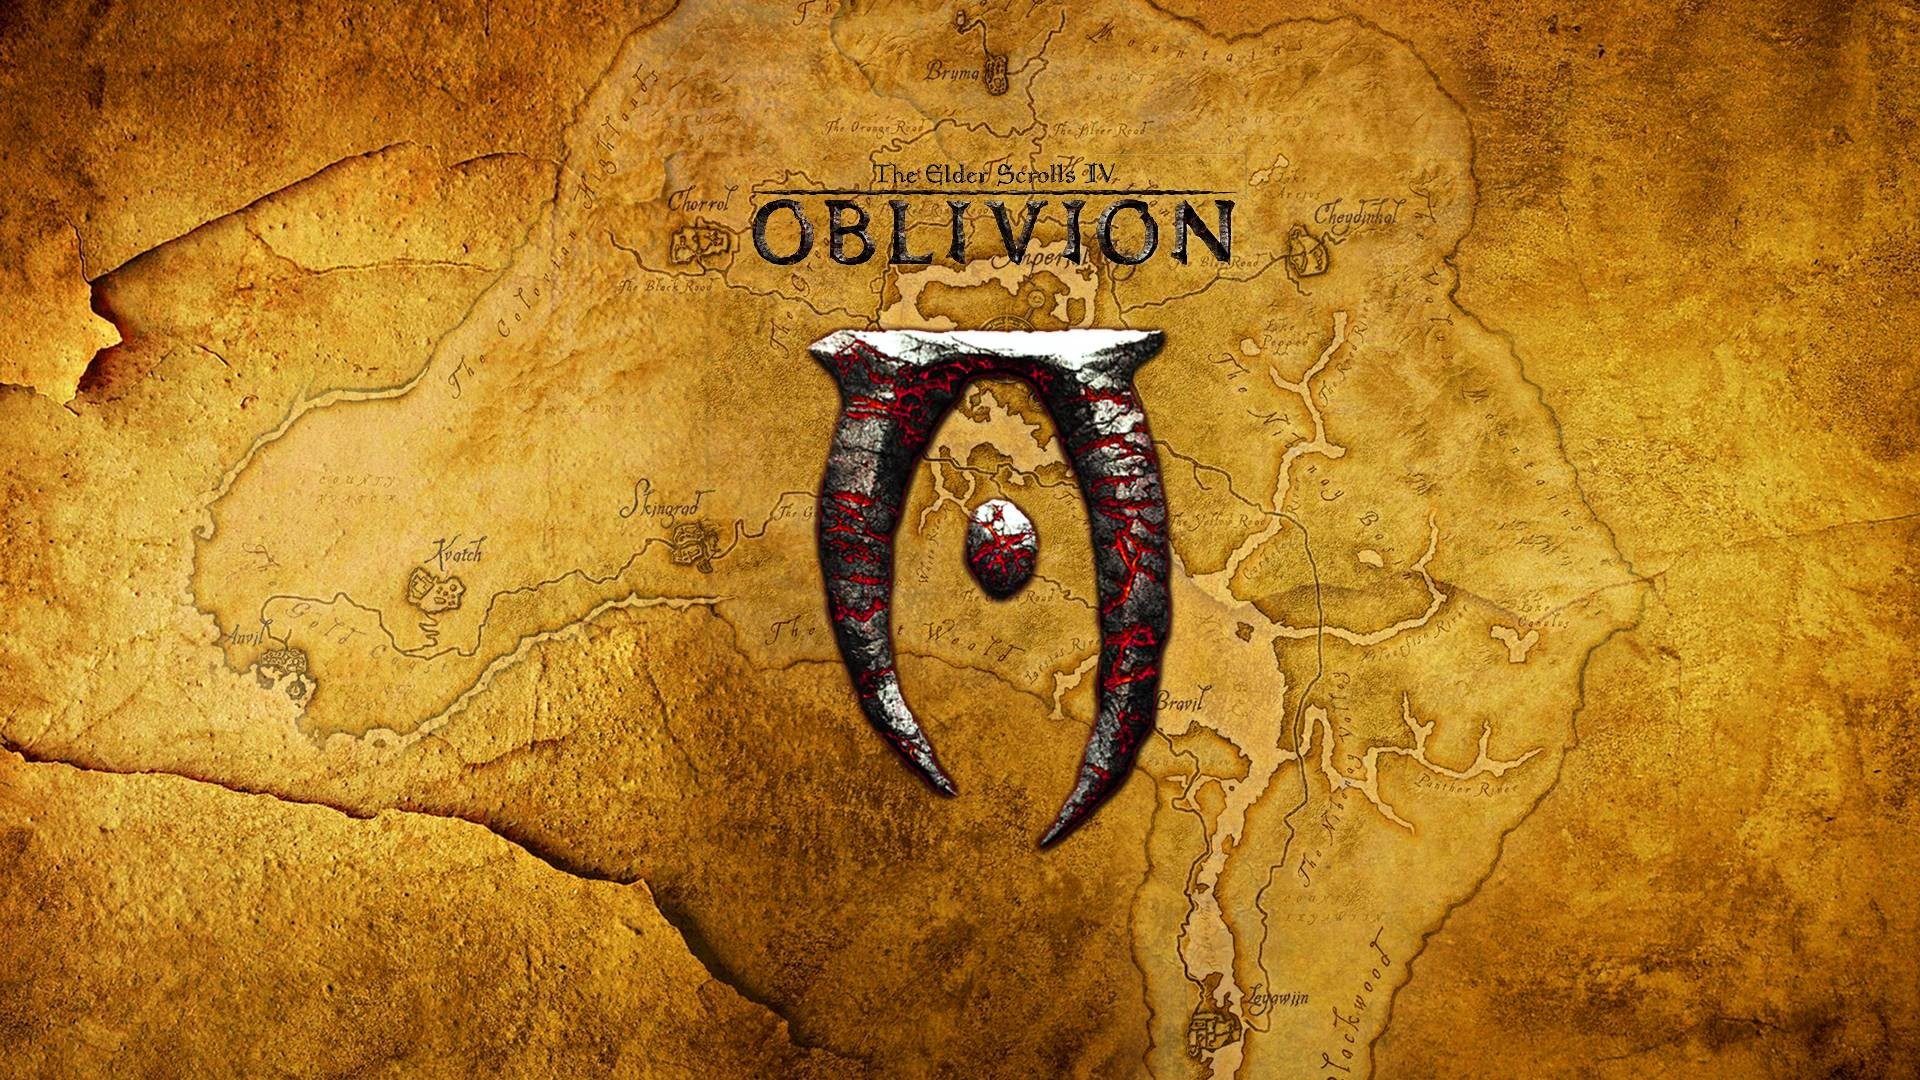 oblivion goty pc free download